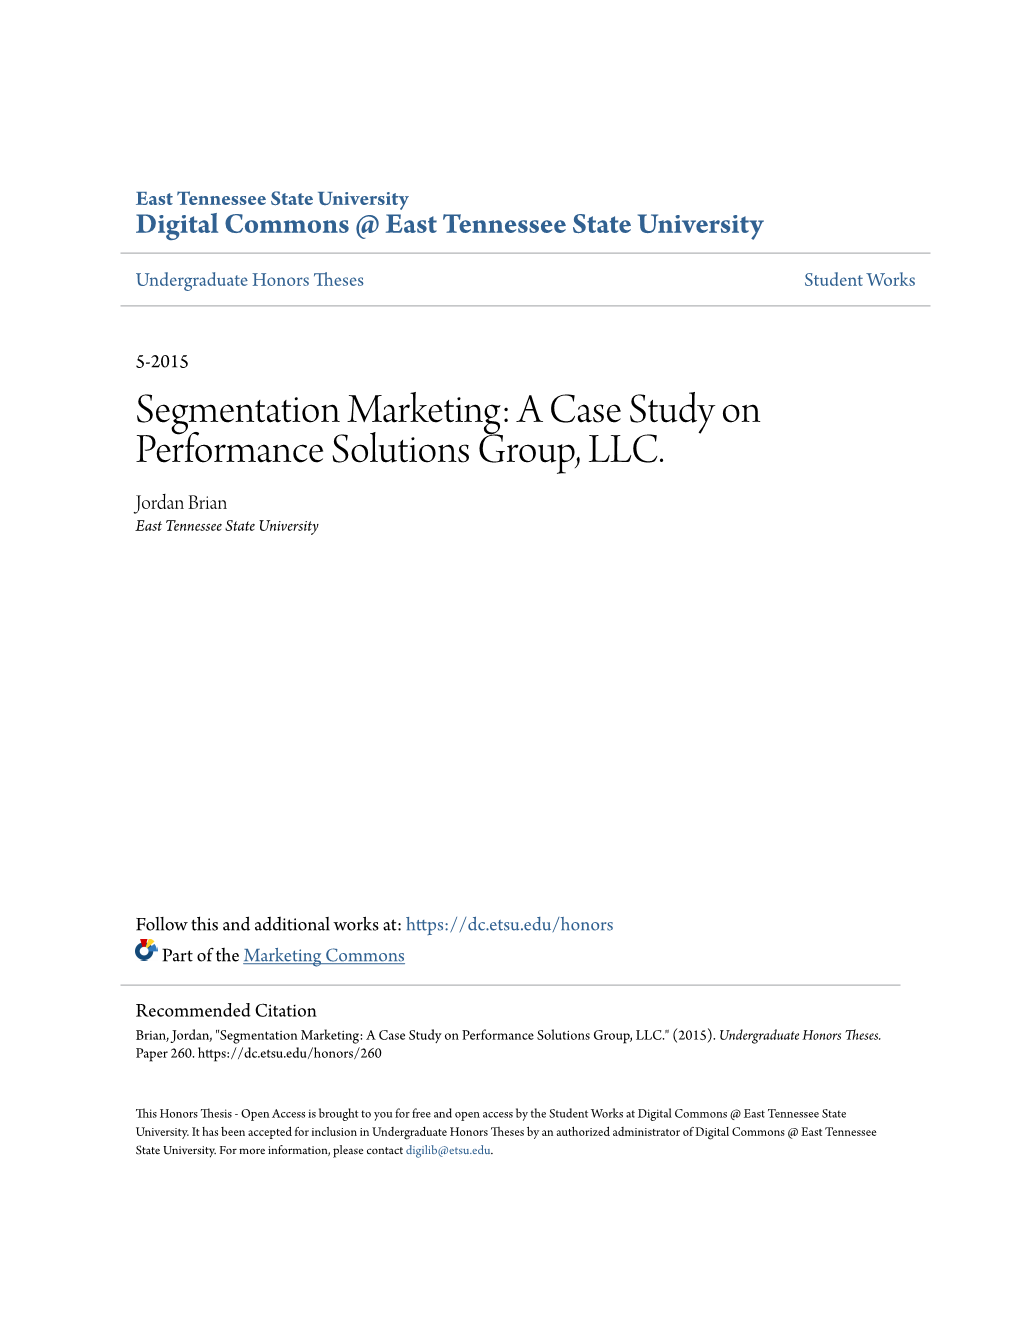 Segmentation Marketing: a Case Study on Performance Solutions Group, LLC